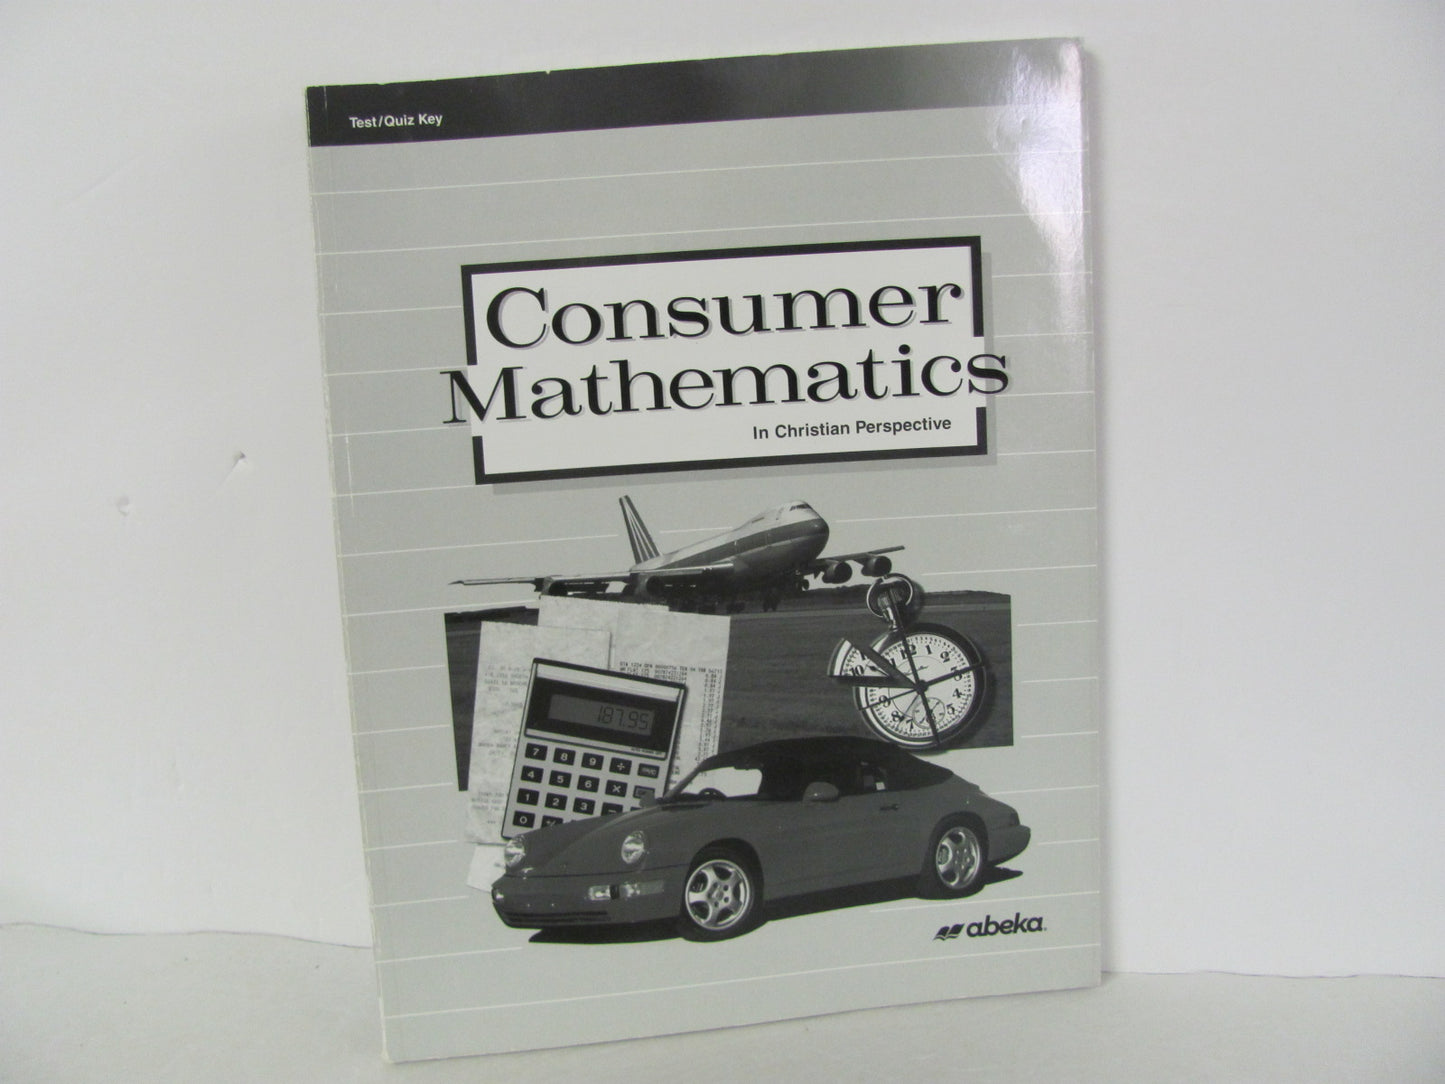 Consumer Mathematics Abeka Test/Quiz Key  Pre-Owned Mathematics Textbooks